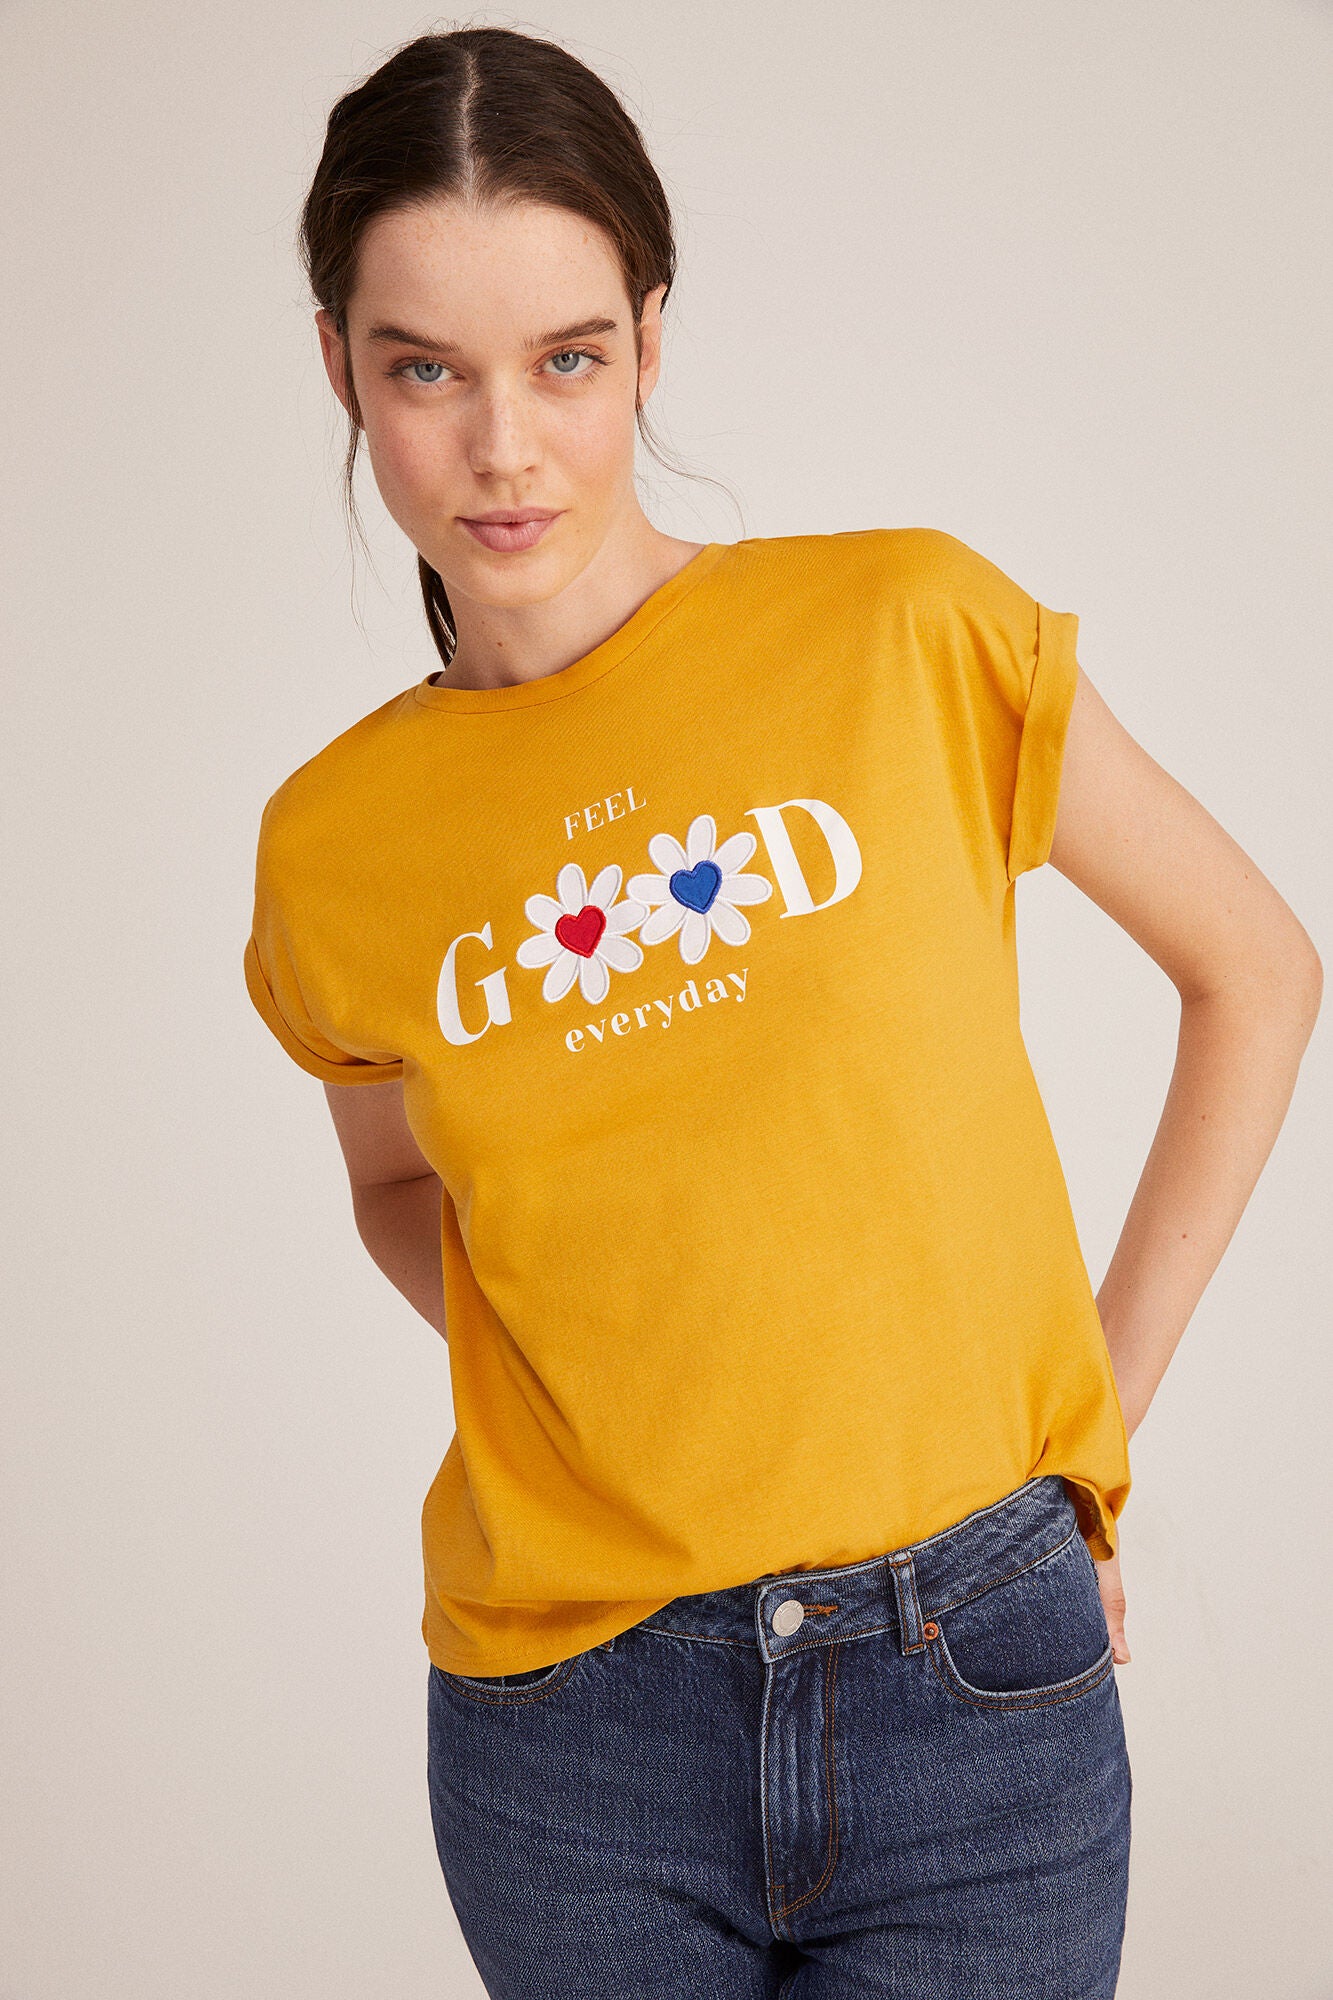 "Feel good everyday" T-shirt